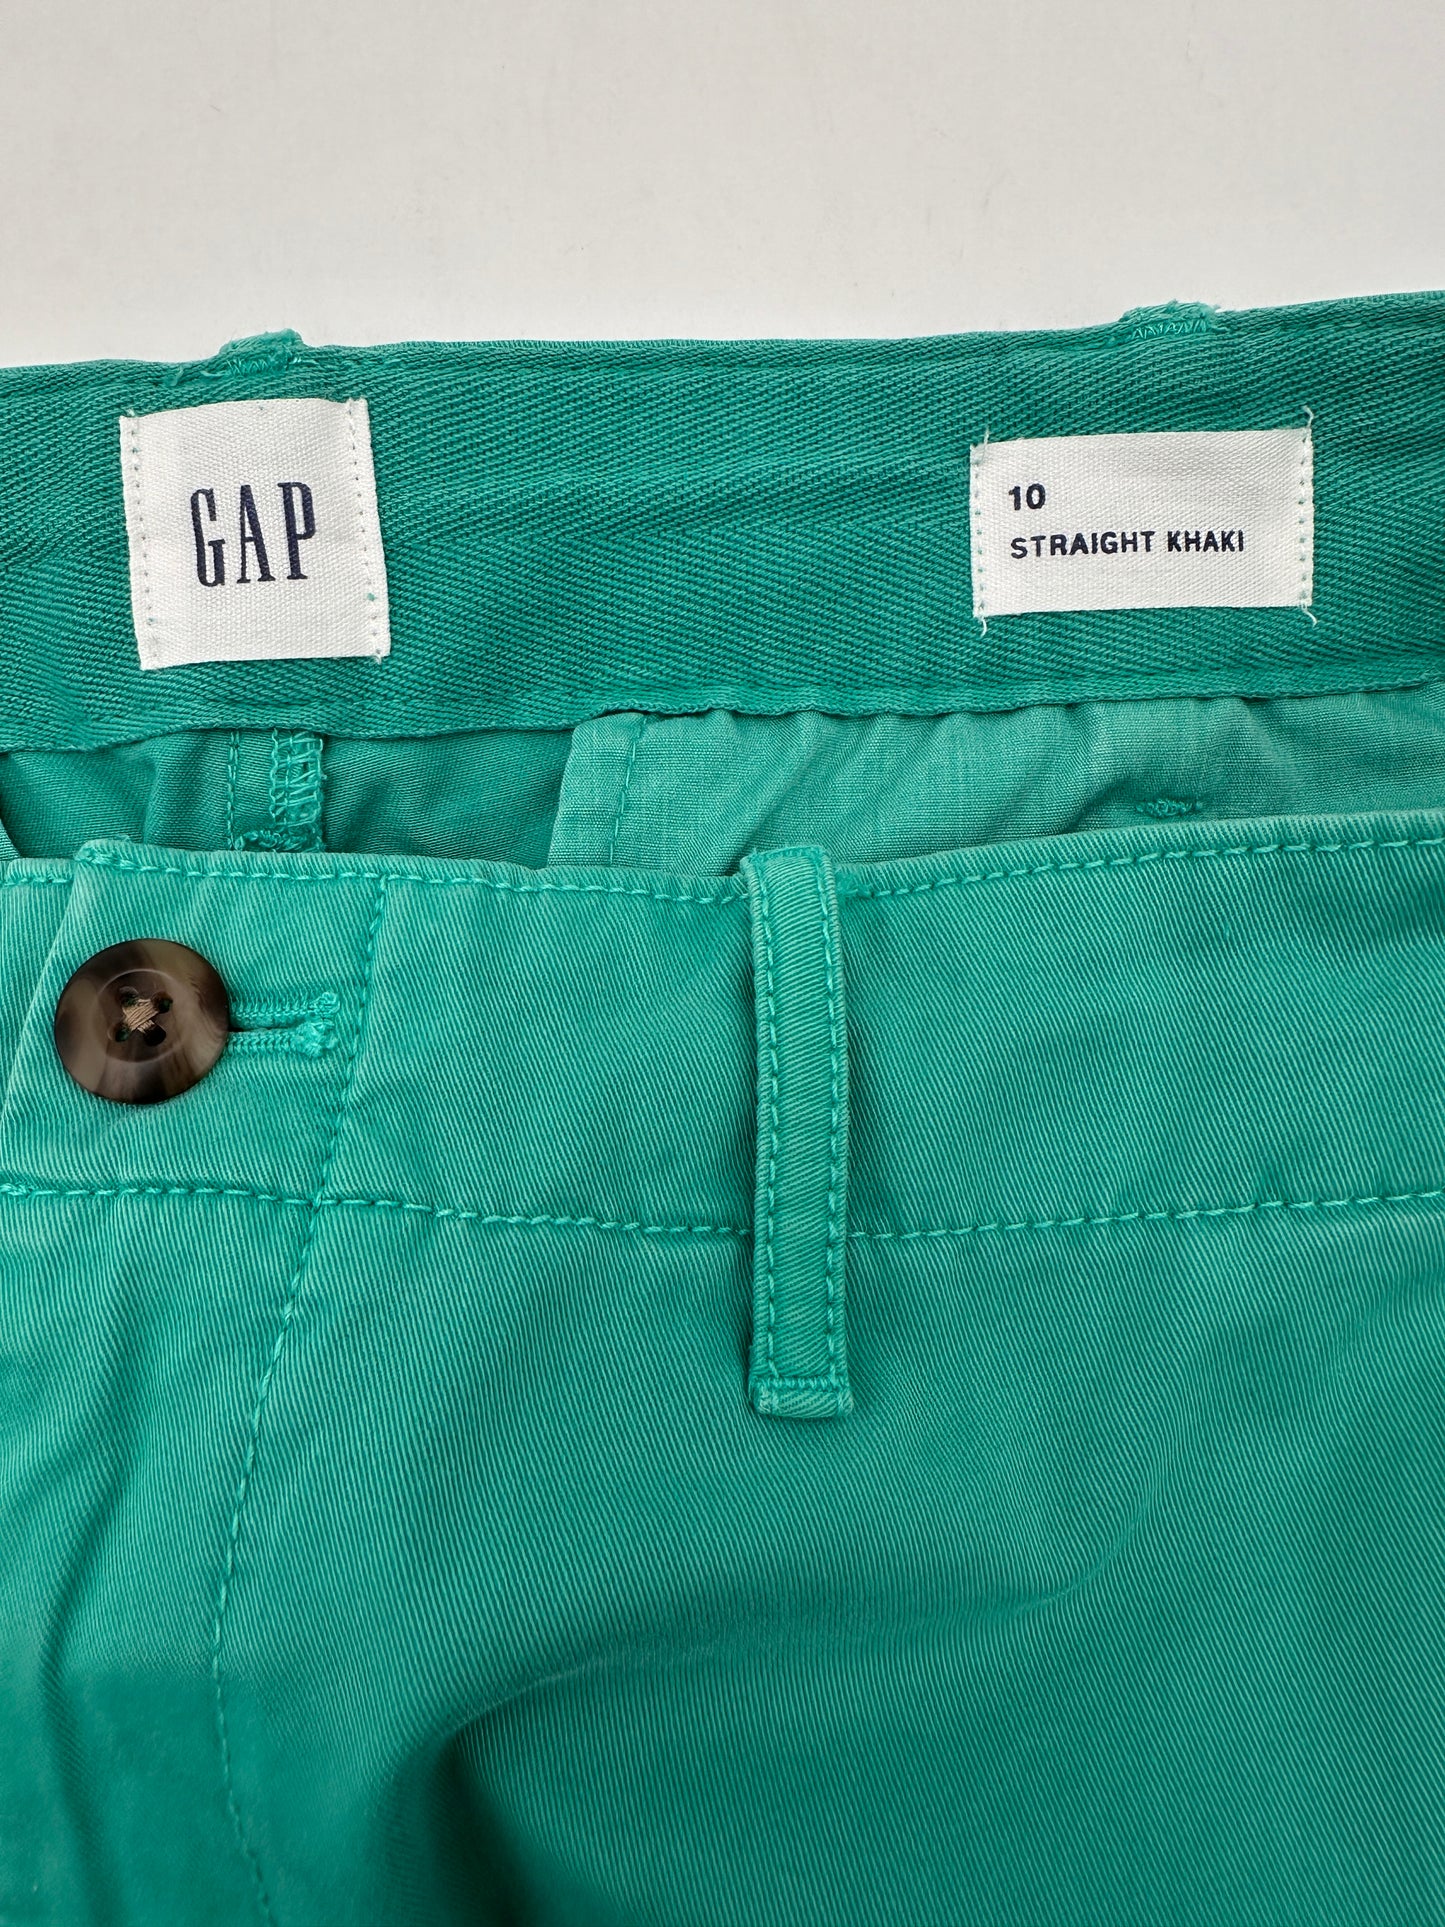 Gap Size 10 Green Straight Khaki Pants